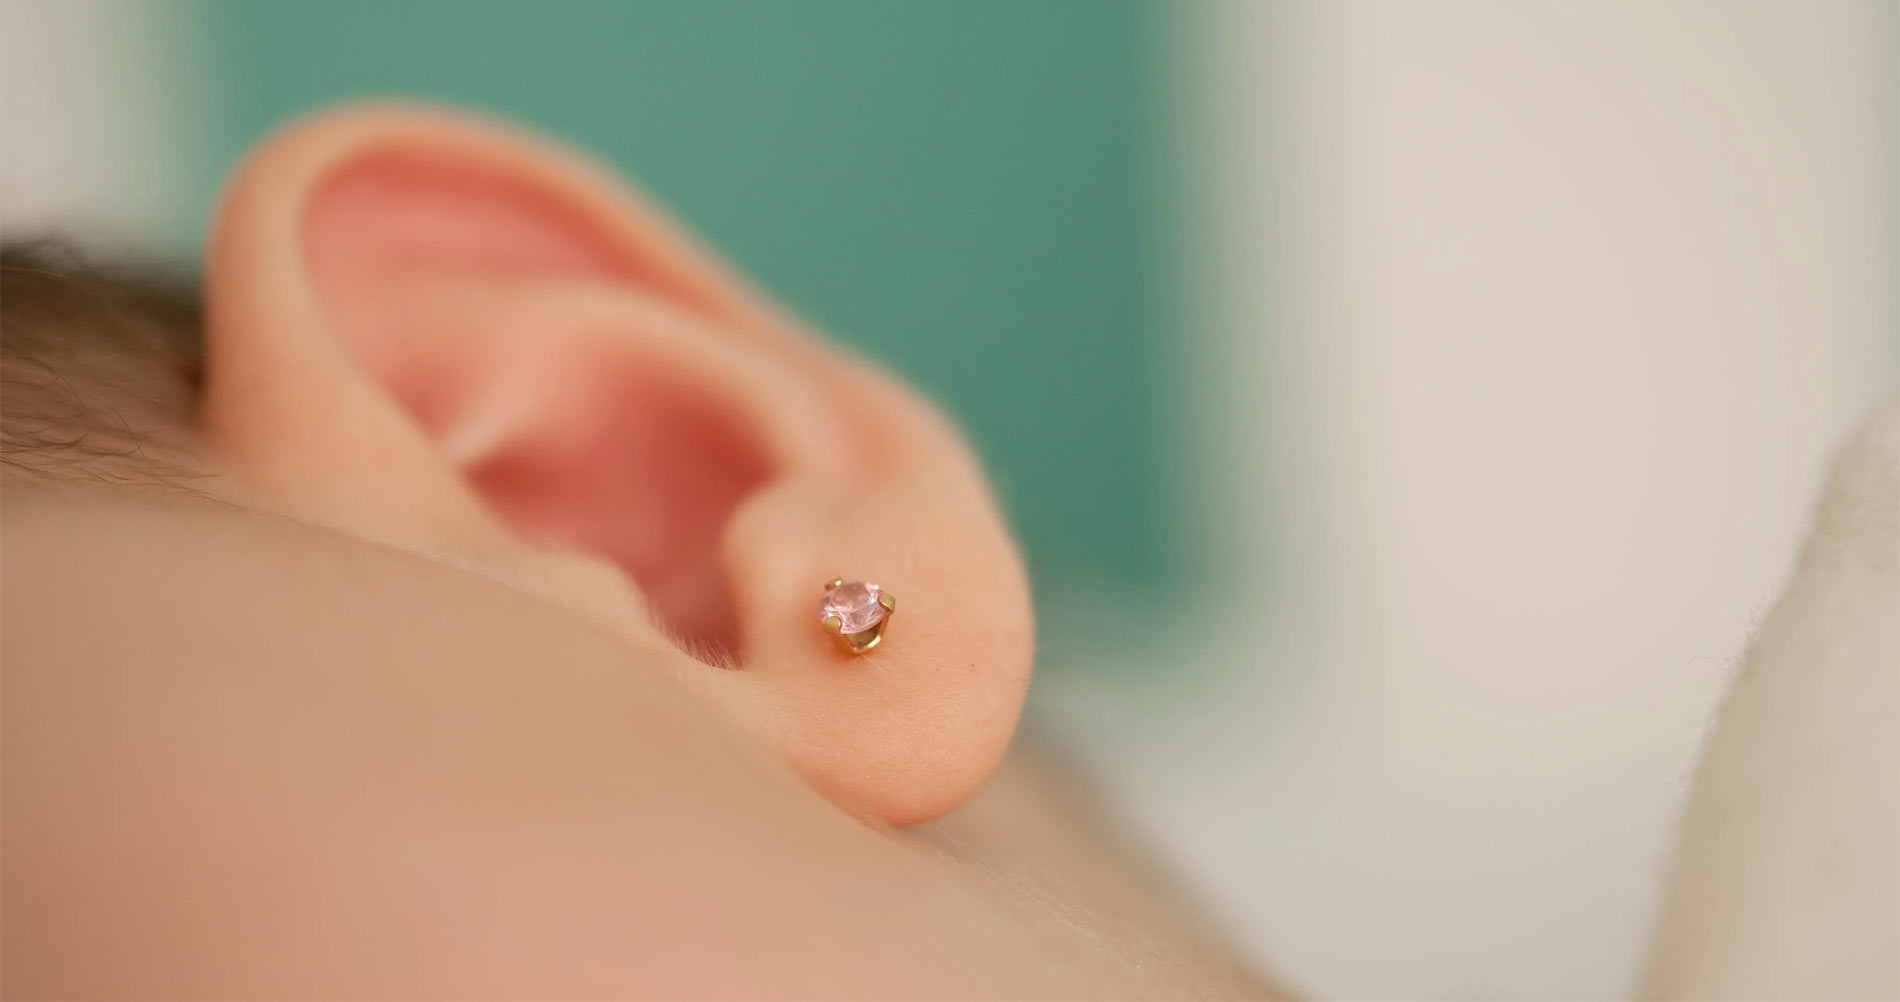 Pediatric Ear Piercing in Philadelphia